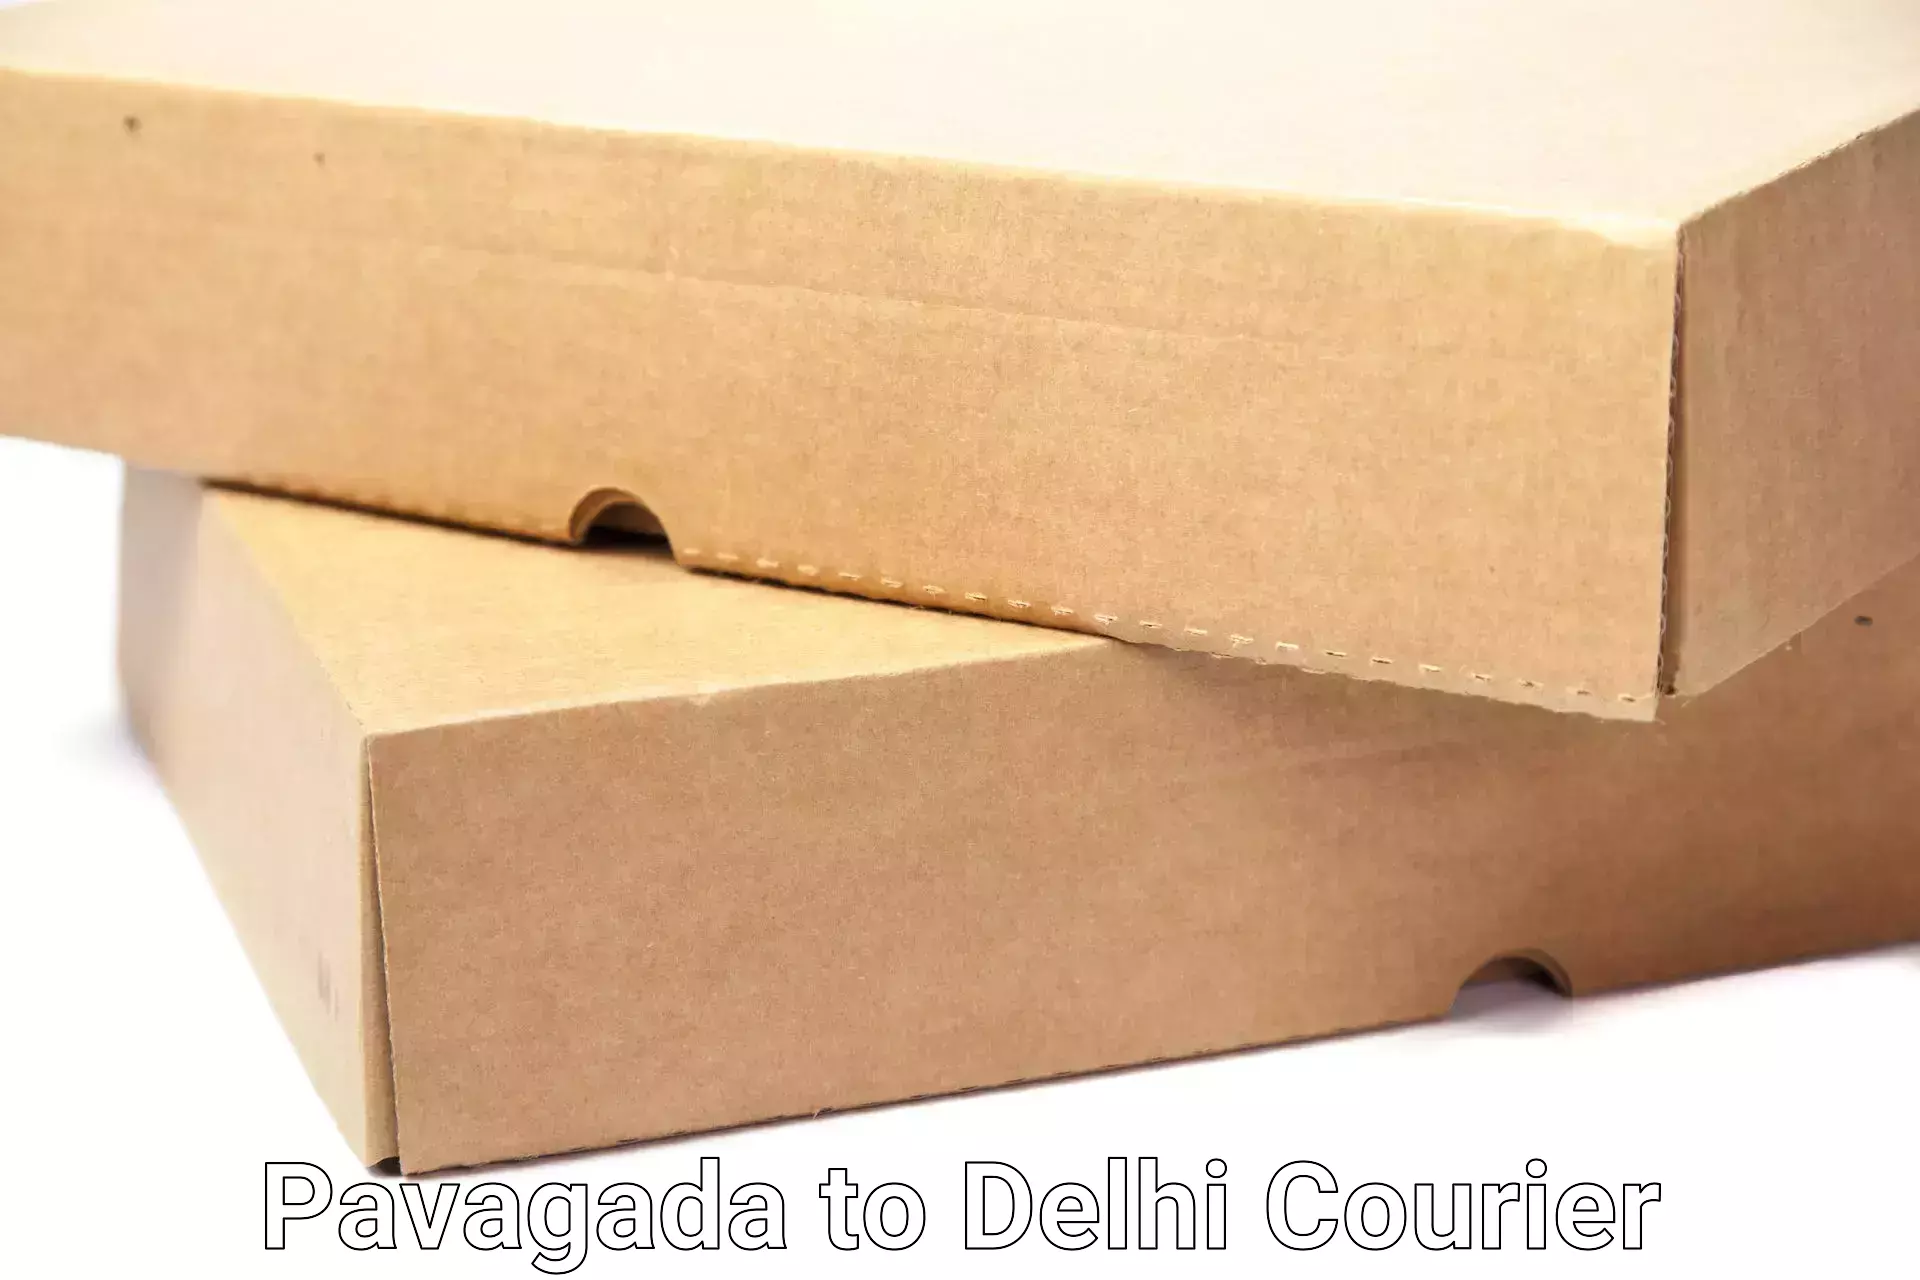 Professional moving company Pavagada to University of Delhi